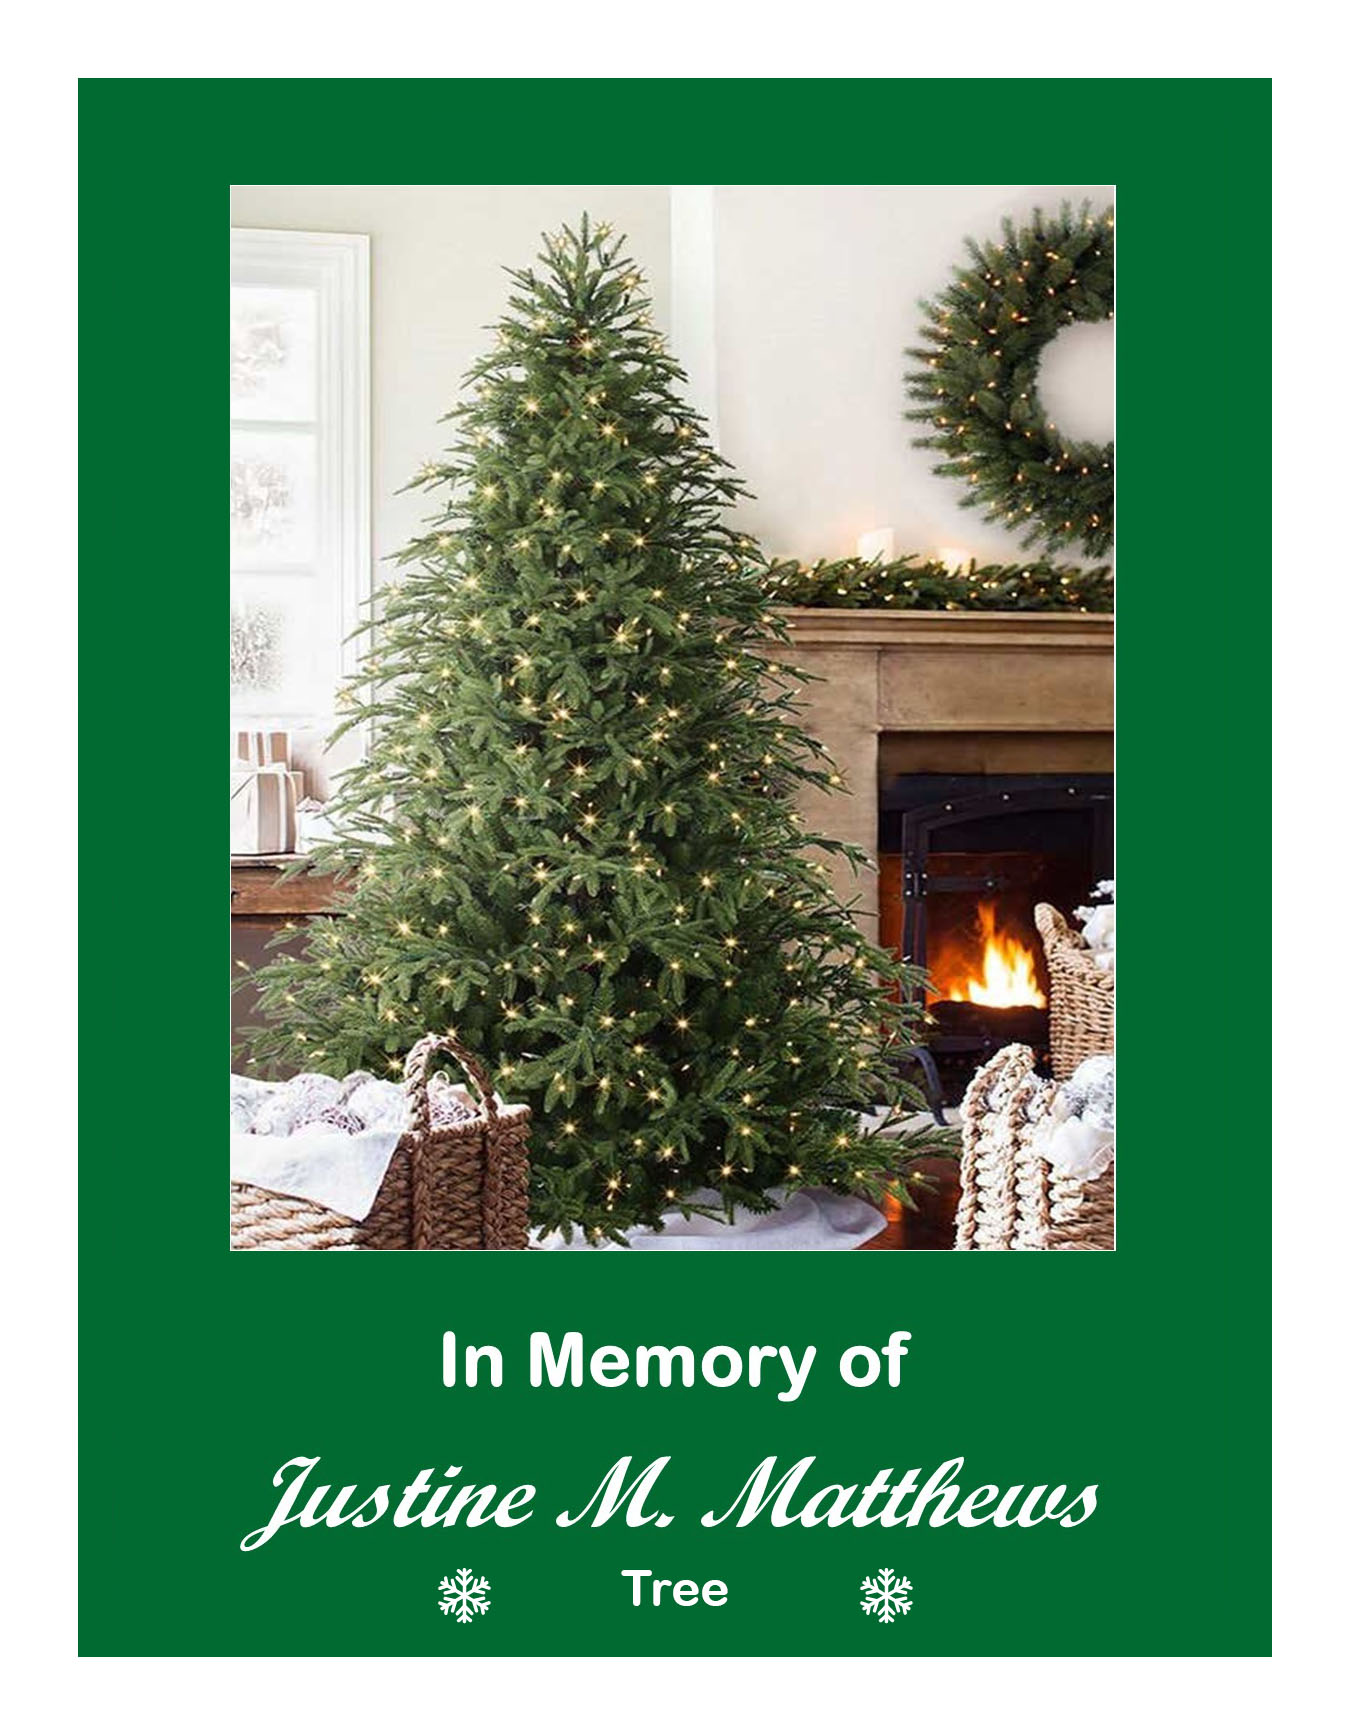 In Memory of Justine M. Matthews